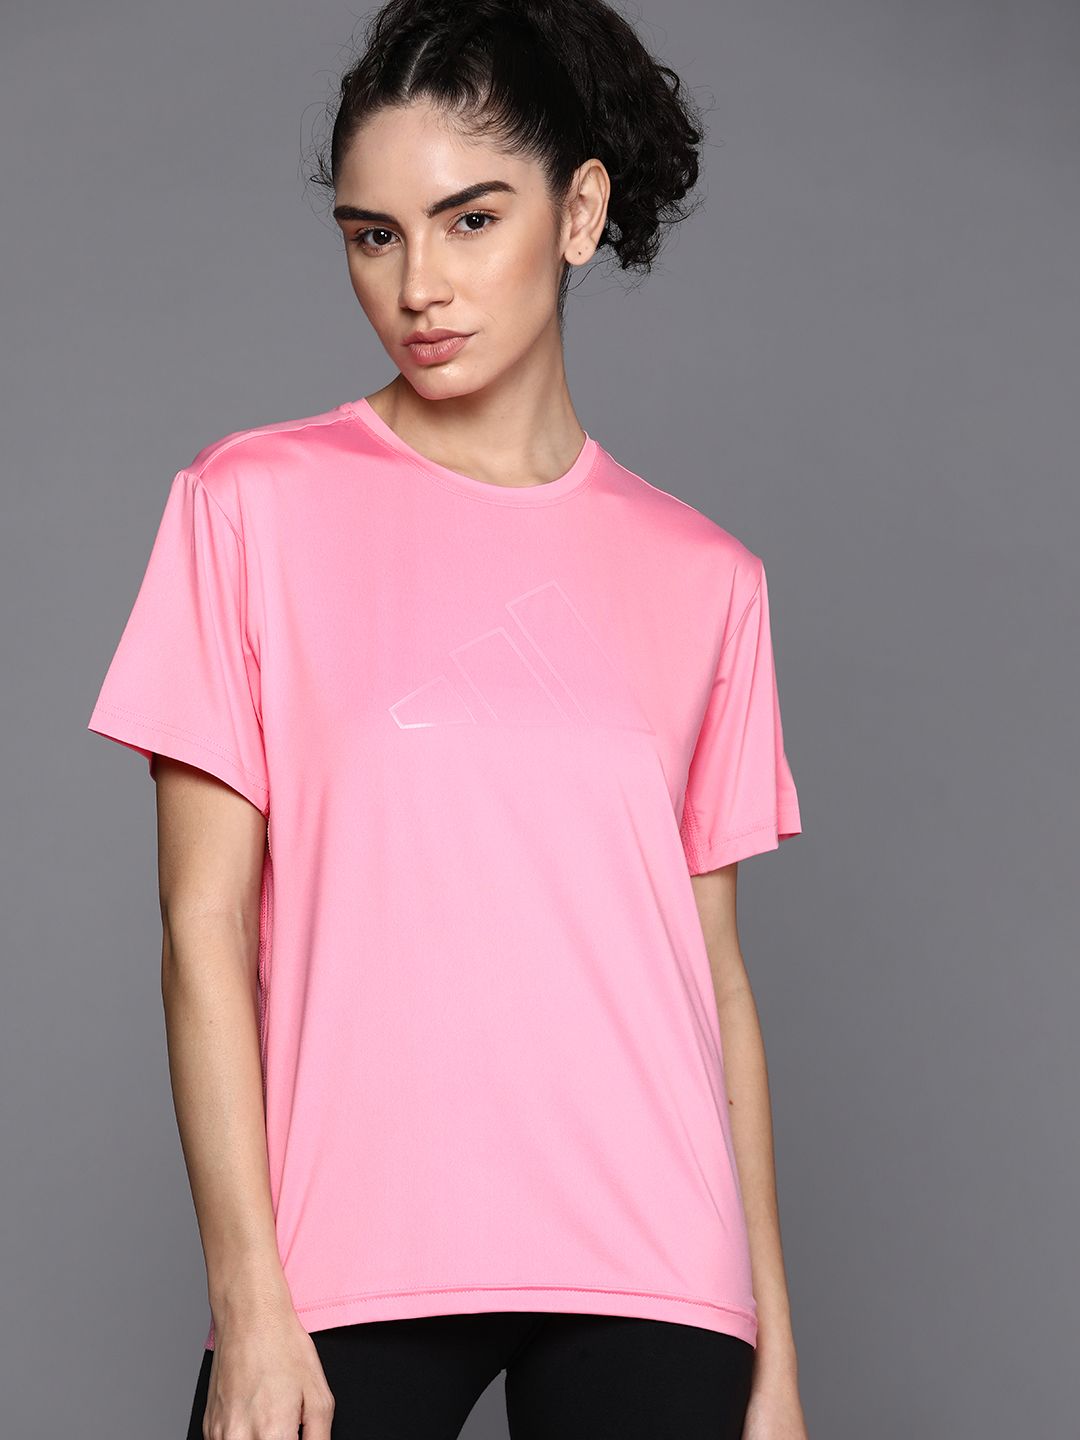 ADIDAS Women Pink Printed T-shirt Price in India